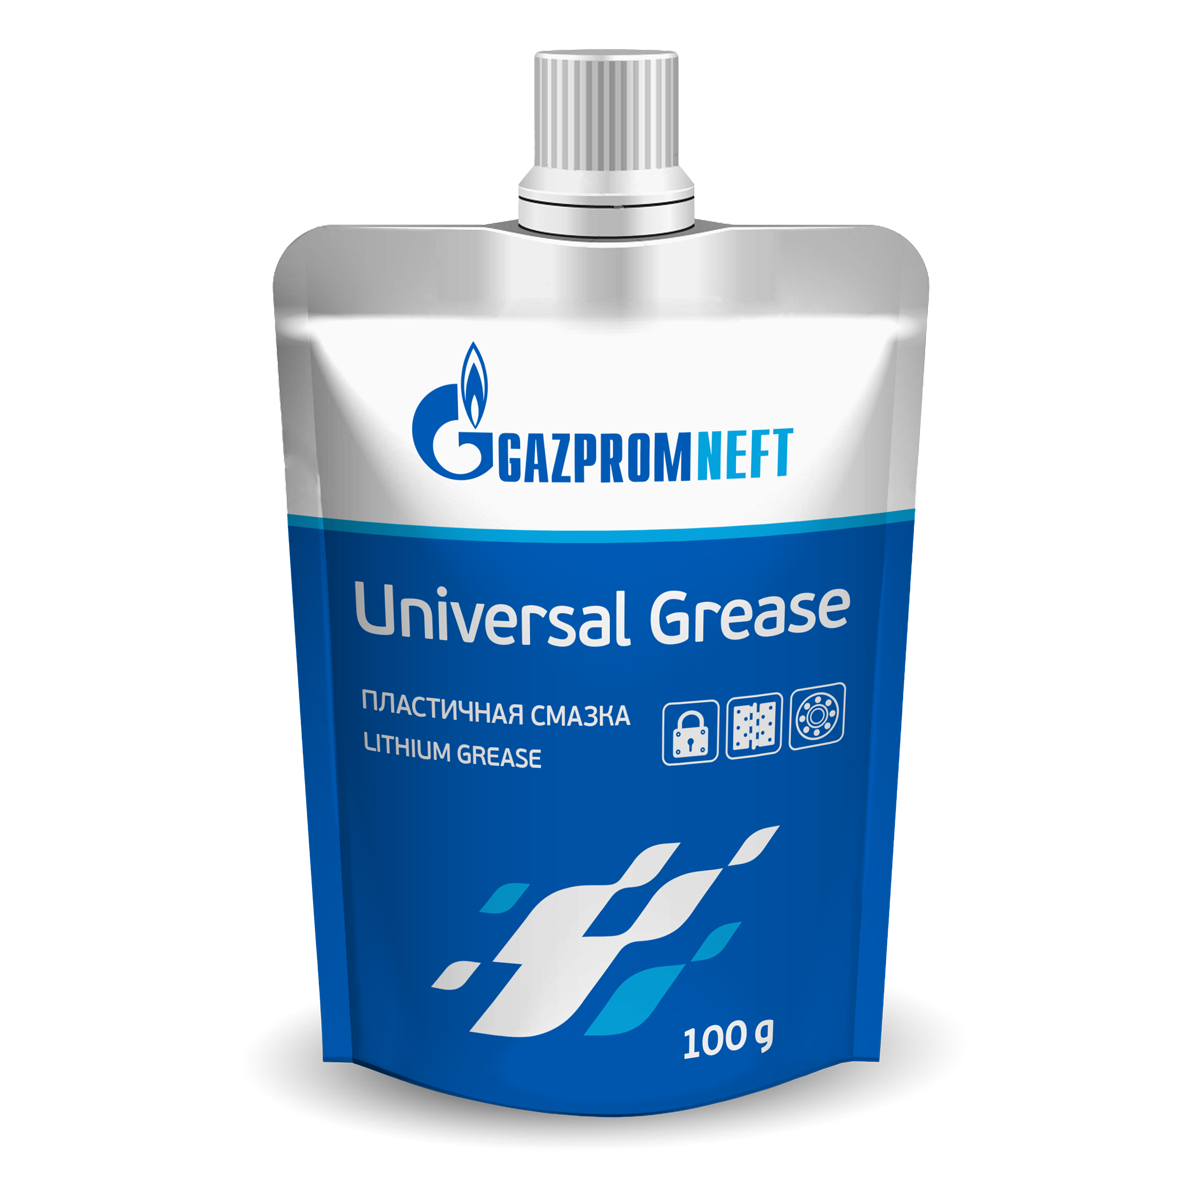 Gazpromneft Universal Grease, 100 г